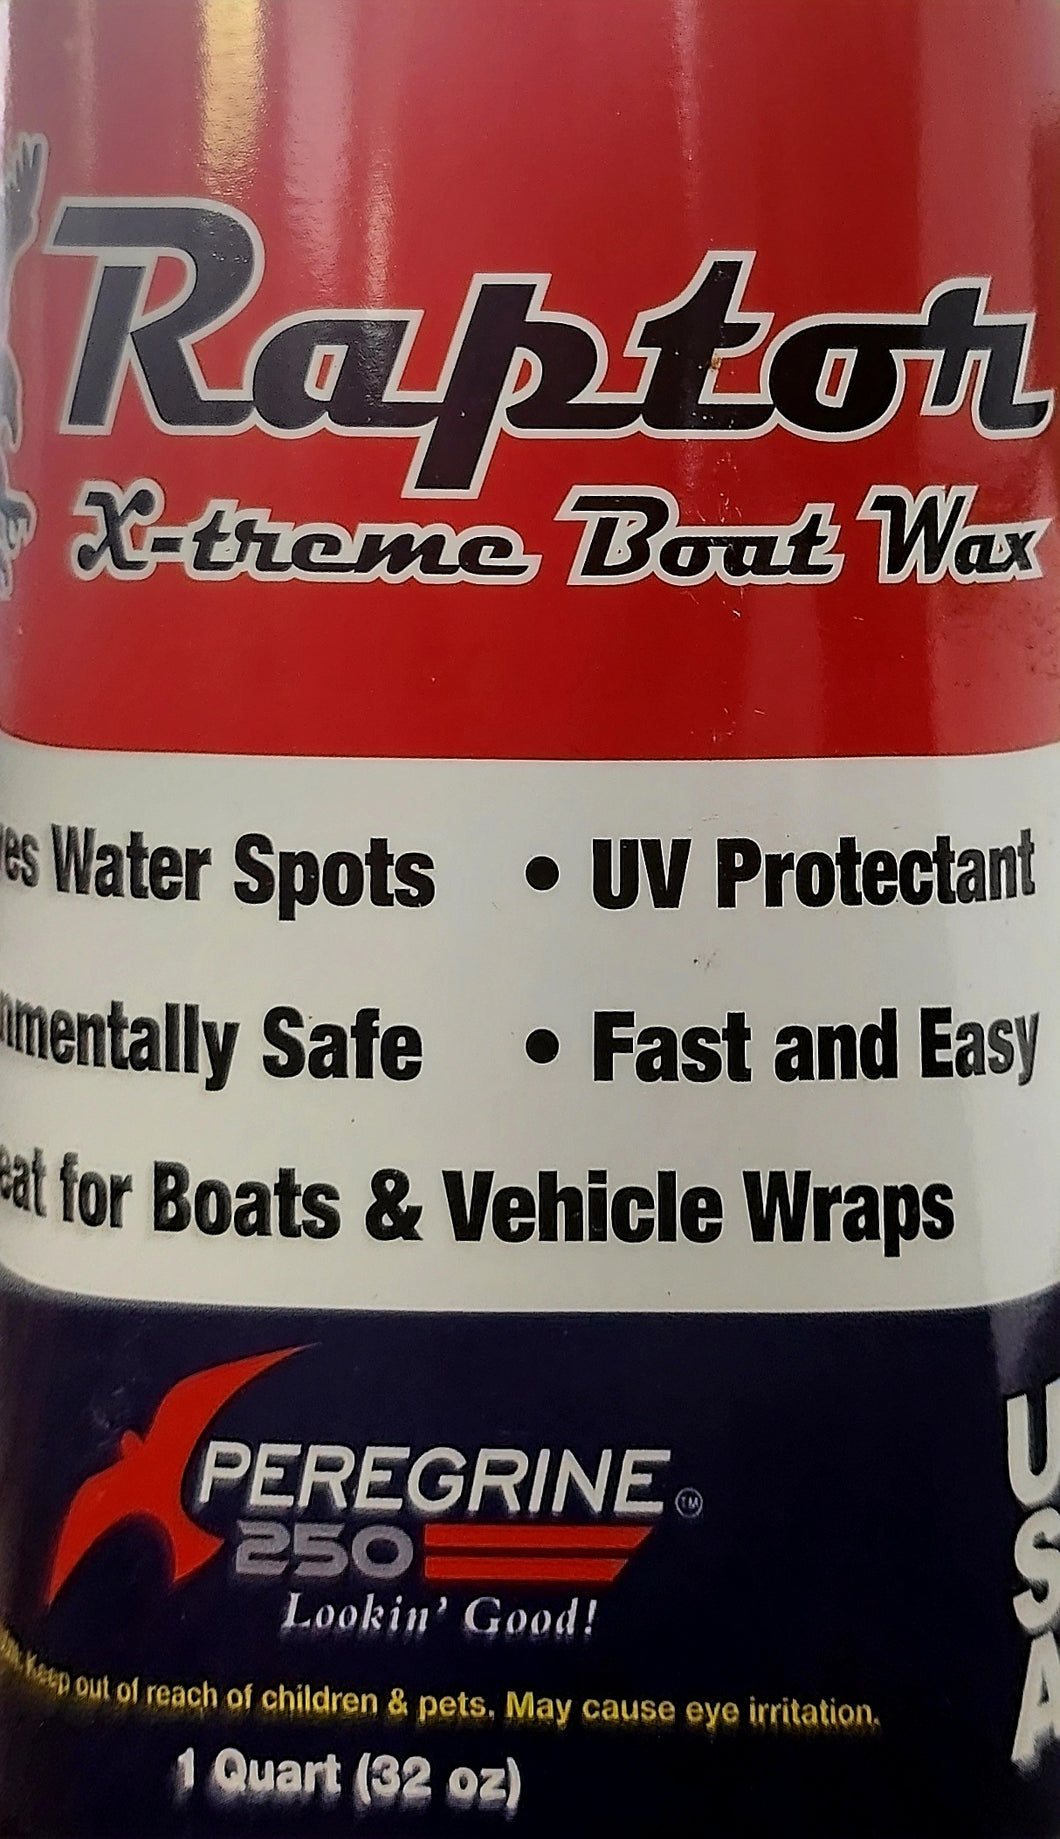 Peregrine Raptor X-treme Boat wax